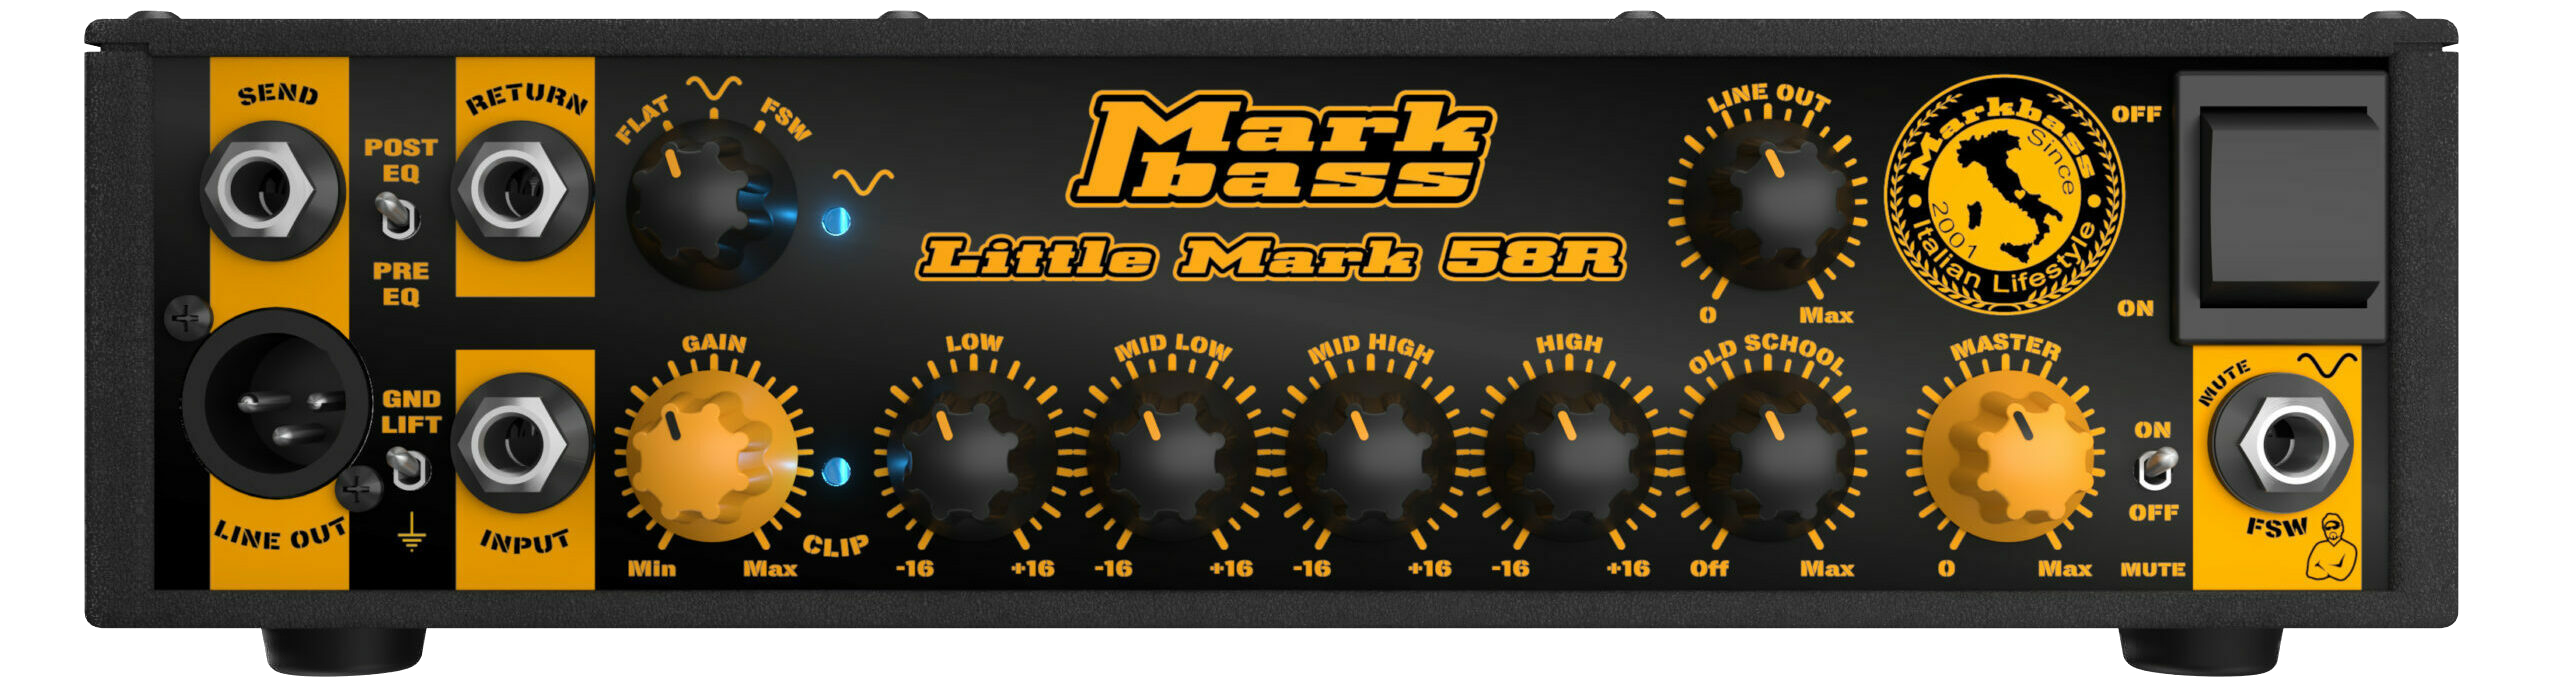 Little Mark 58R